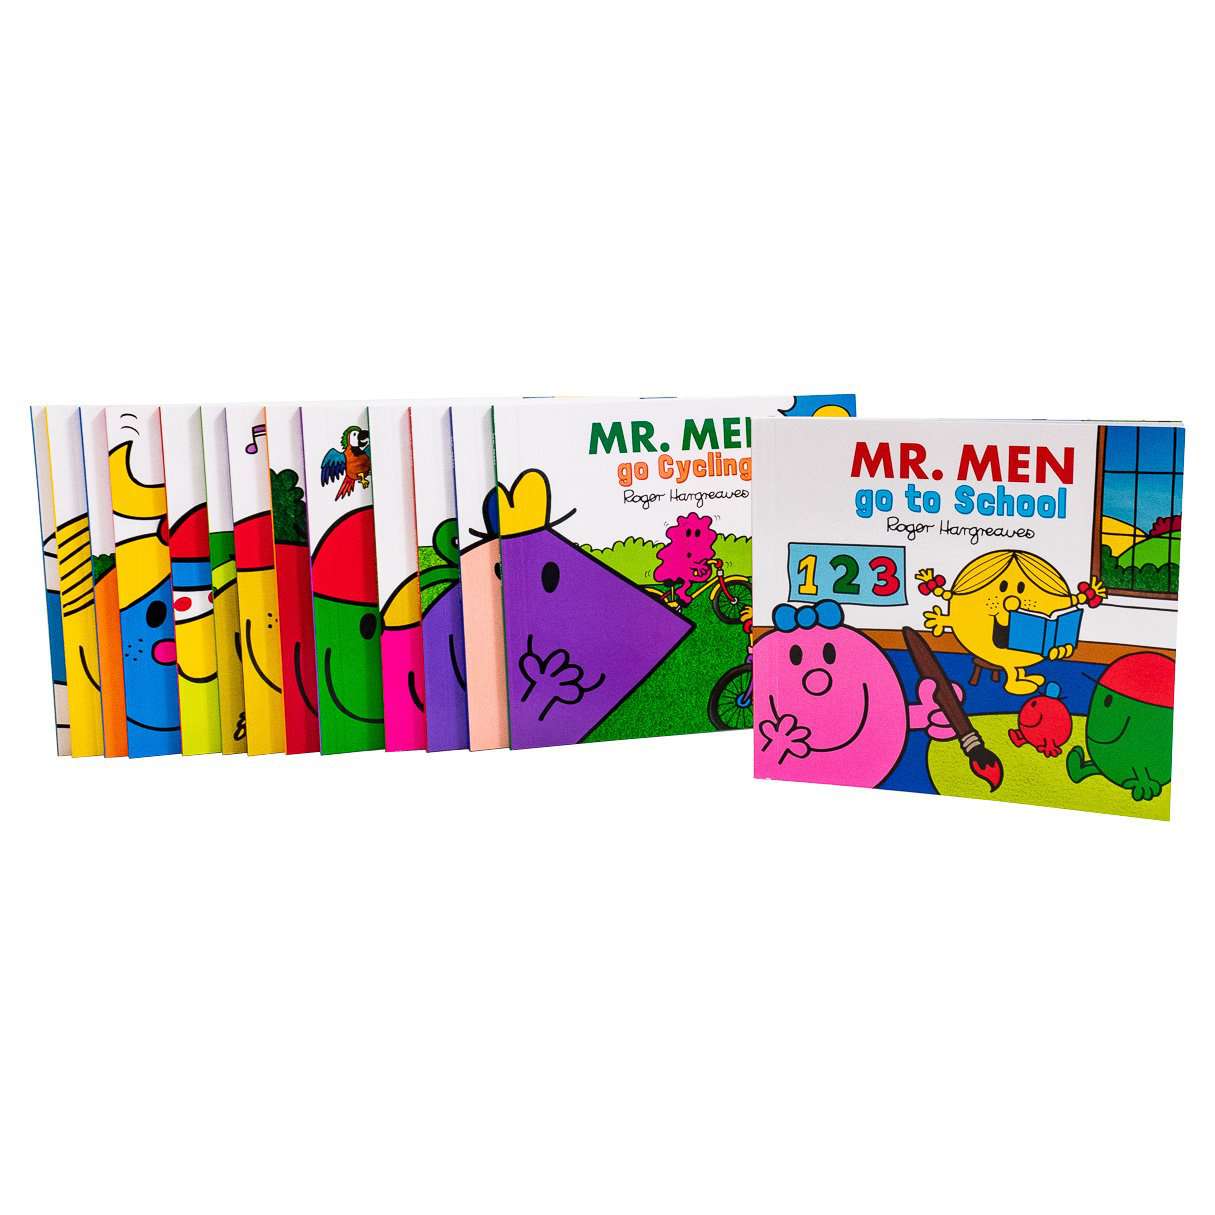 Mr Men & Little Miss Every Day 14 Childrens Books Paperback By Roger Hargreaves - St Stephens Books